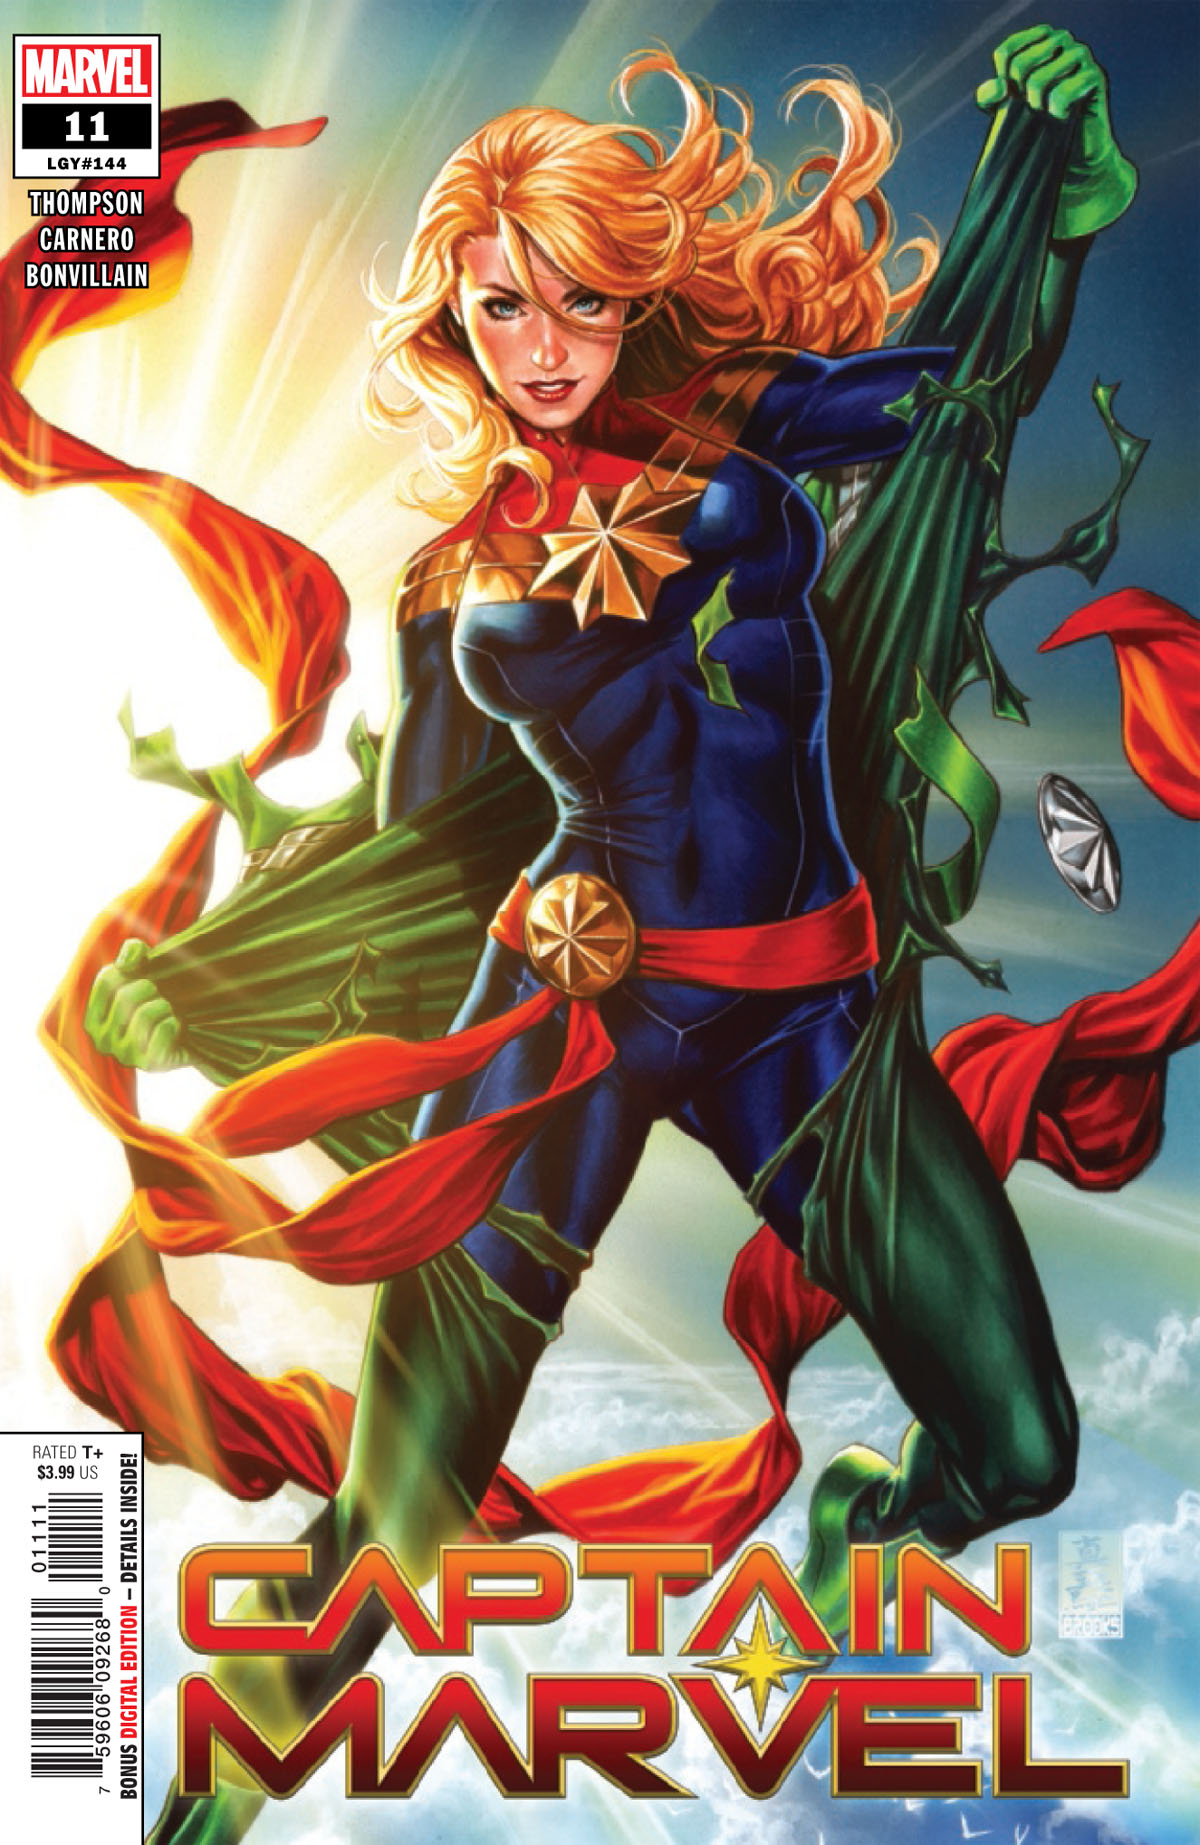 Captain Marvel #11 cover